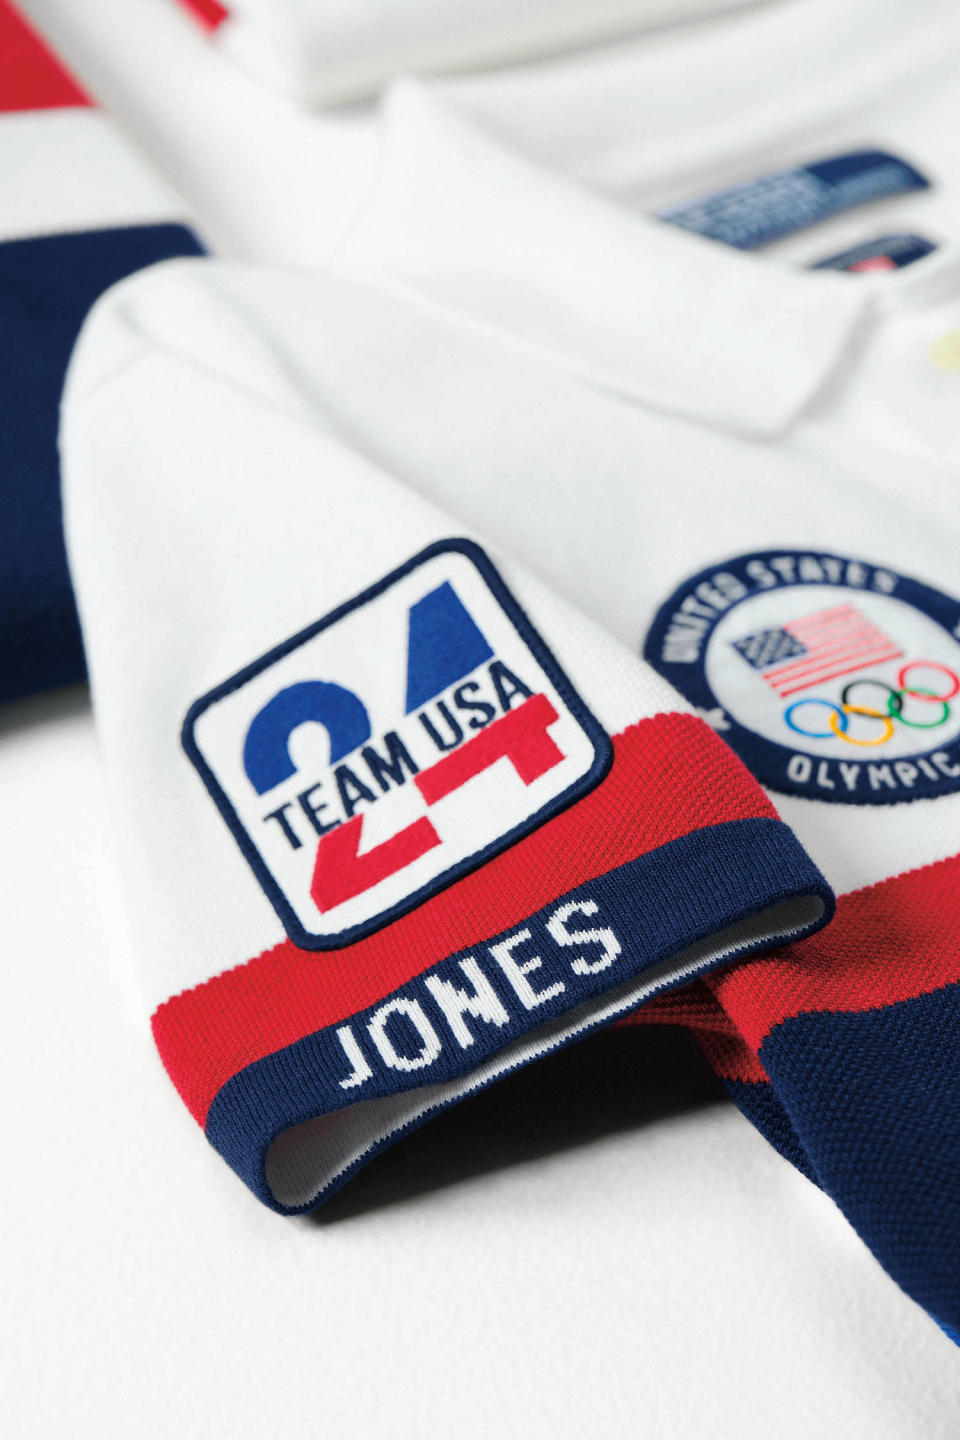 Ralph Lauren Team USA polo shirts for the 2024 Paris Olympics closing ceremony. (Courtesy Ralph Lauren)